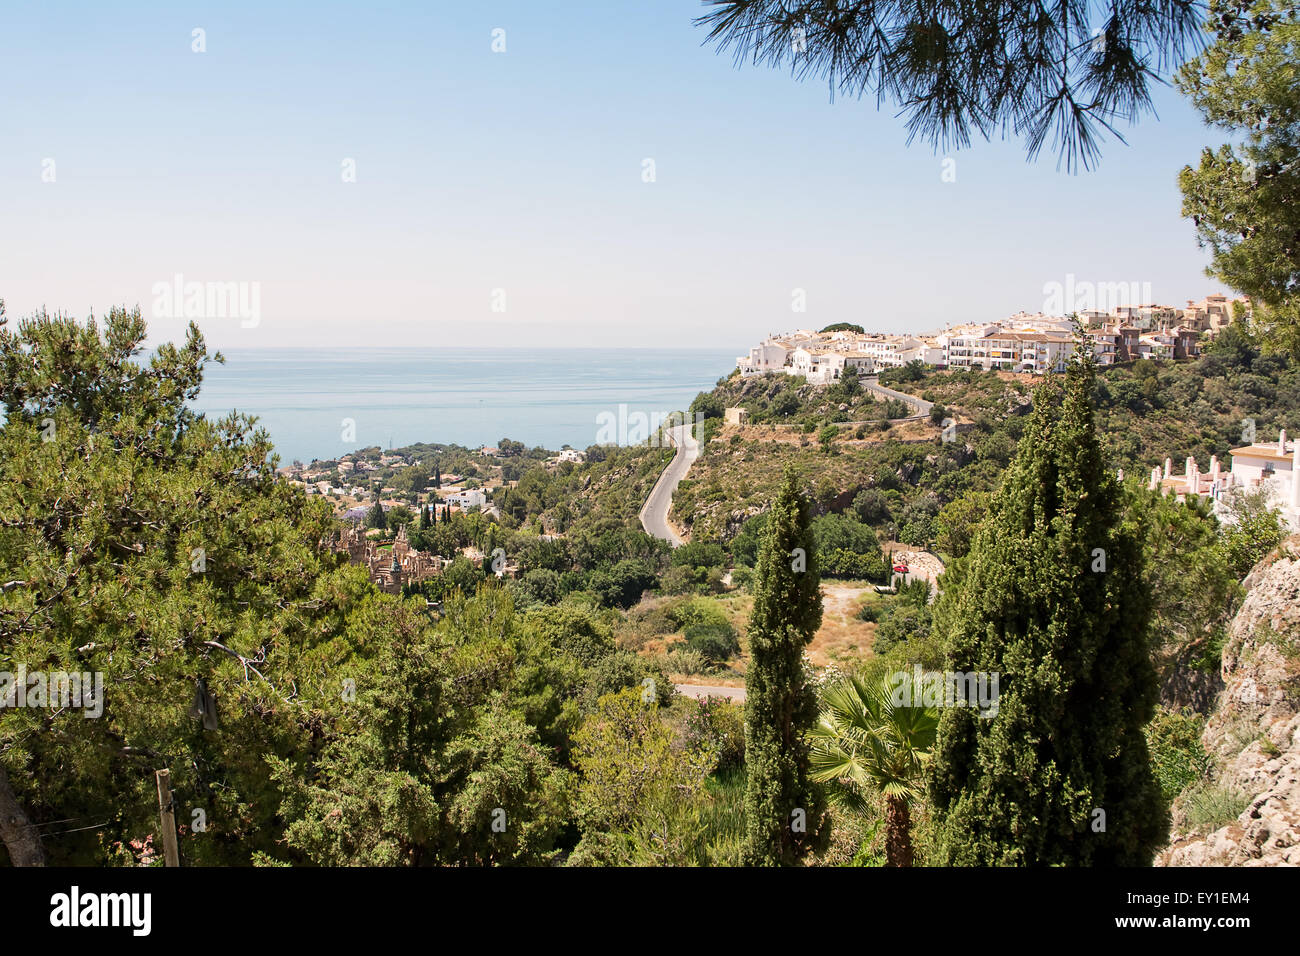 Meeresblick vom Hügel von Benalmadena (Spanien) Stockfoto